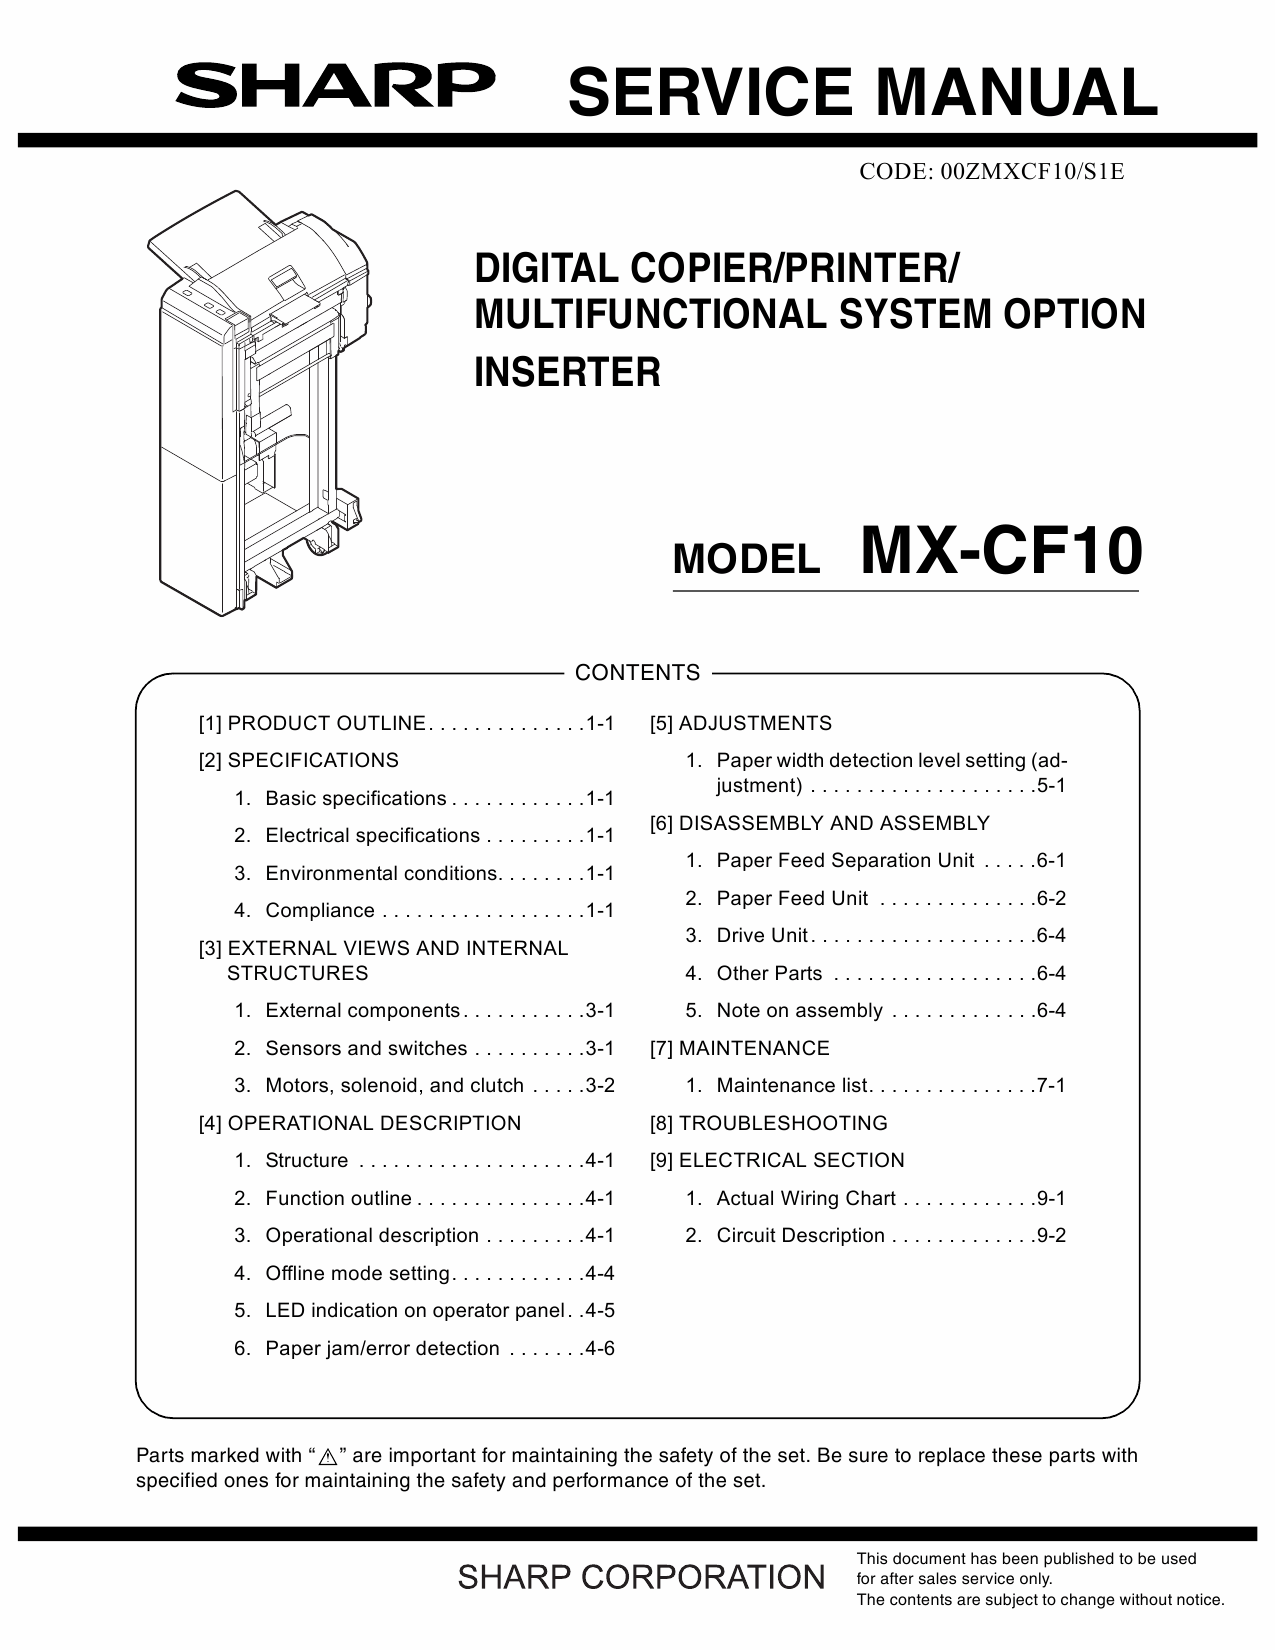 SHARP MX CF10 Service Manual-1